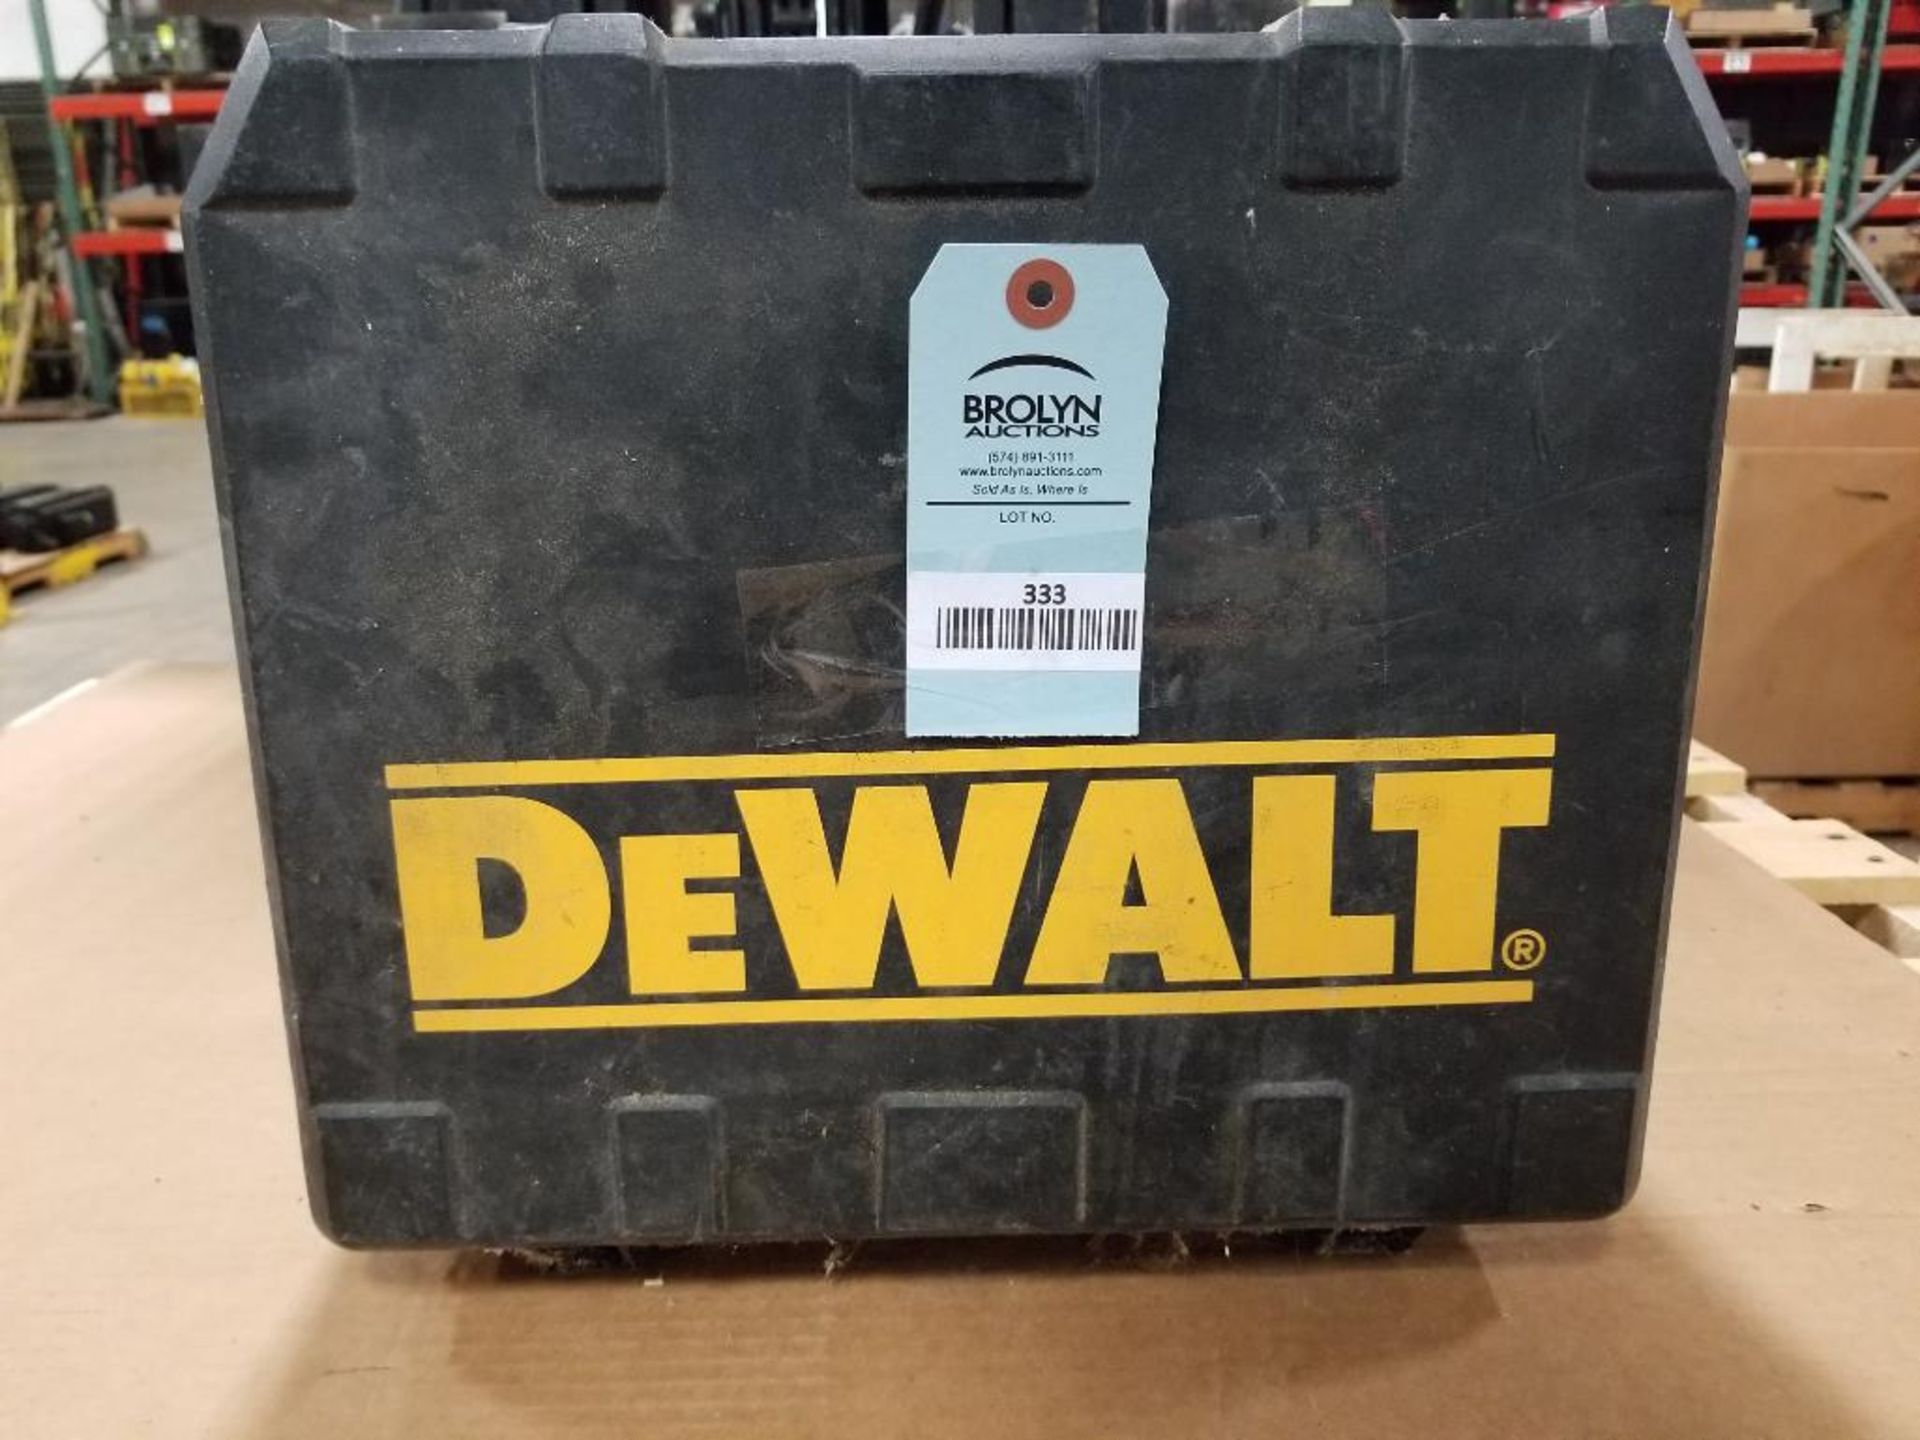 DeWalt DW359 7-1/4" circular saw. 15AMP. - Image 2 of 6